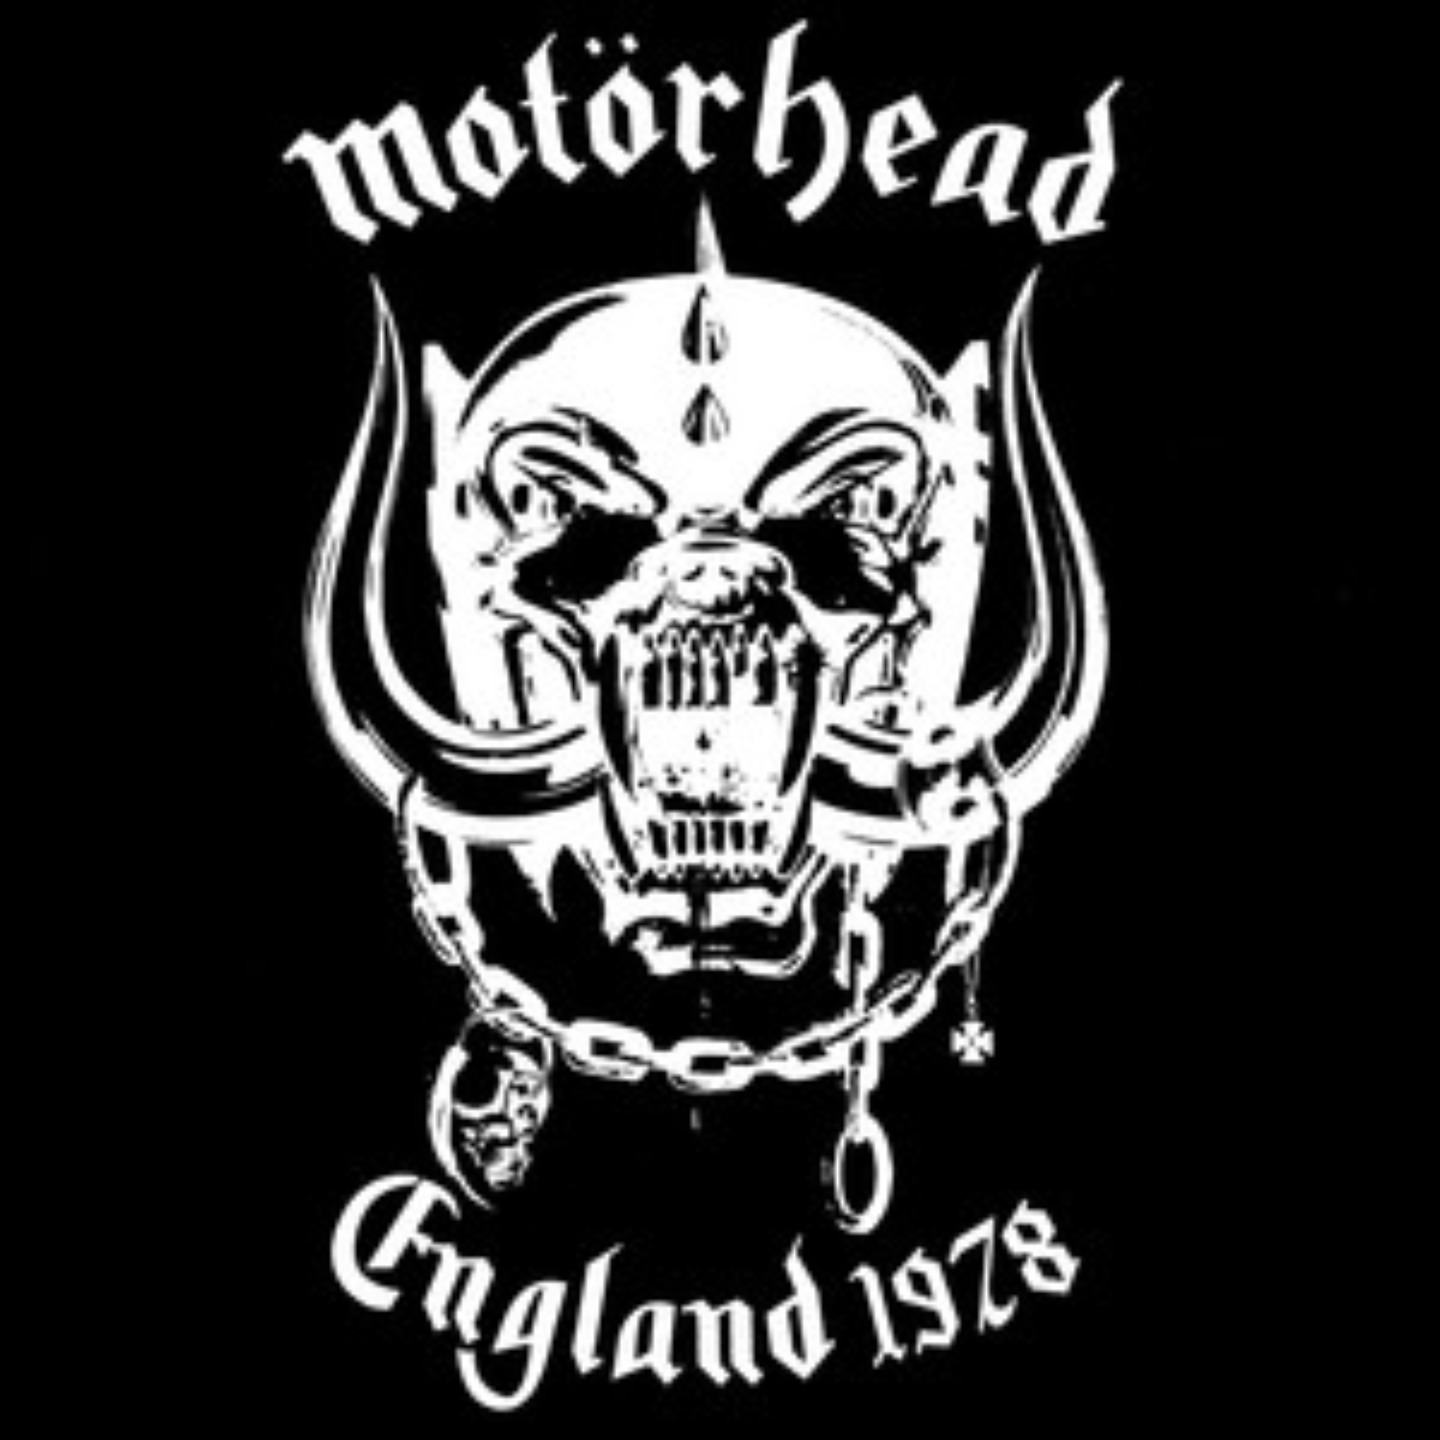 MOTORHEAD - England 1978 LP Silver Vinyl